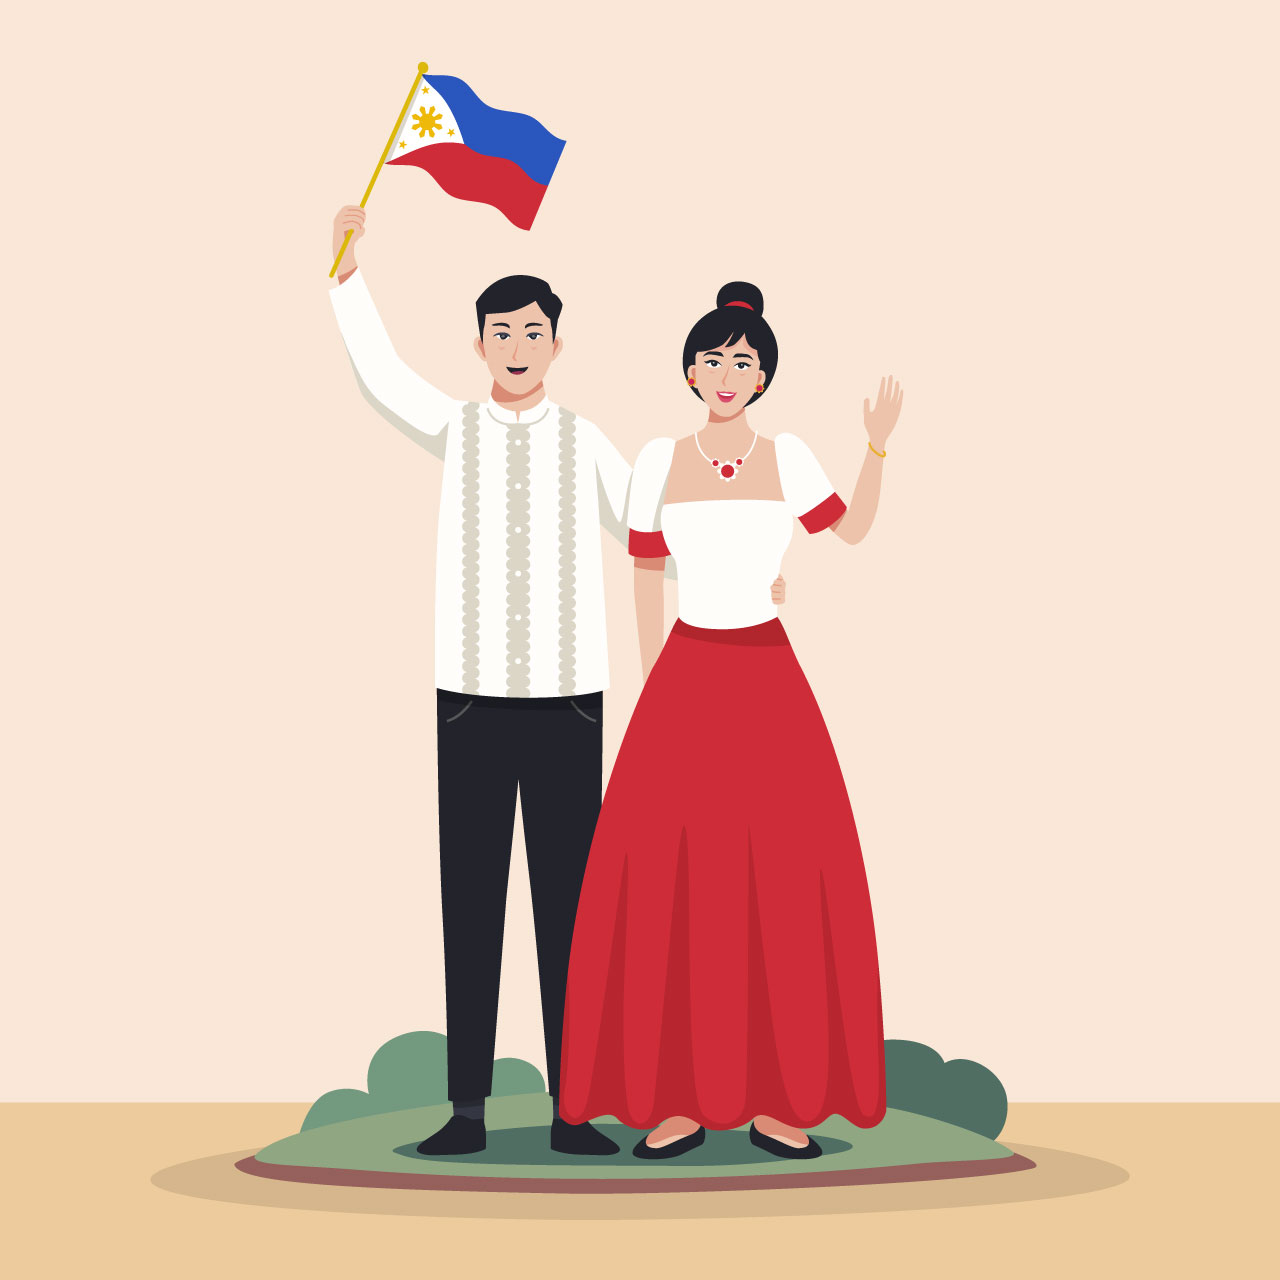 Flat design philippine flag design cartoon illustration image hand drawing sketch